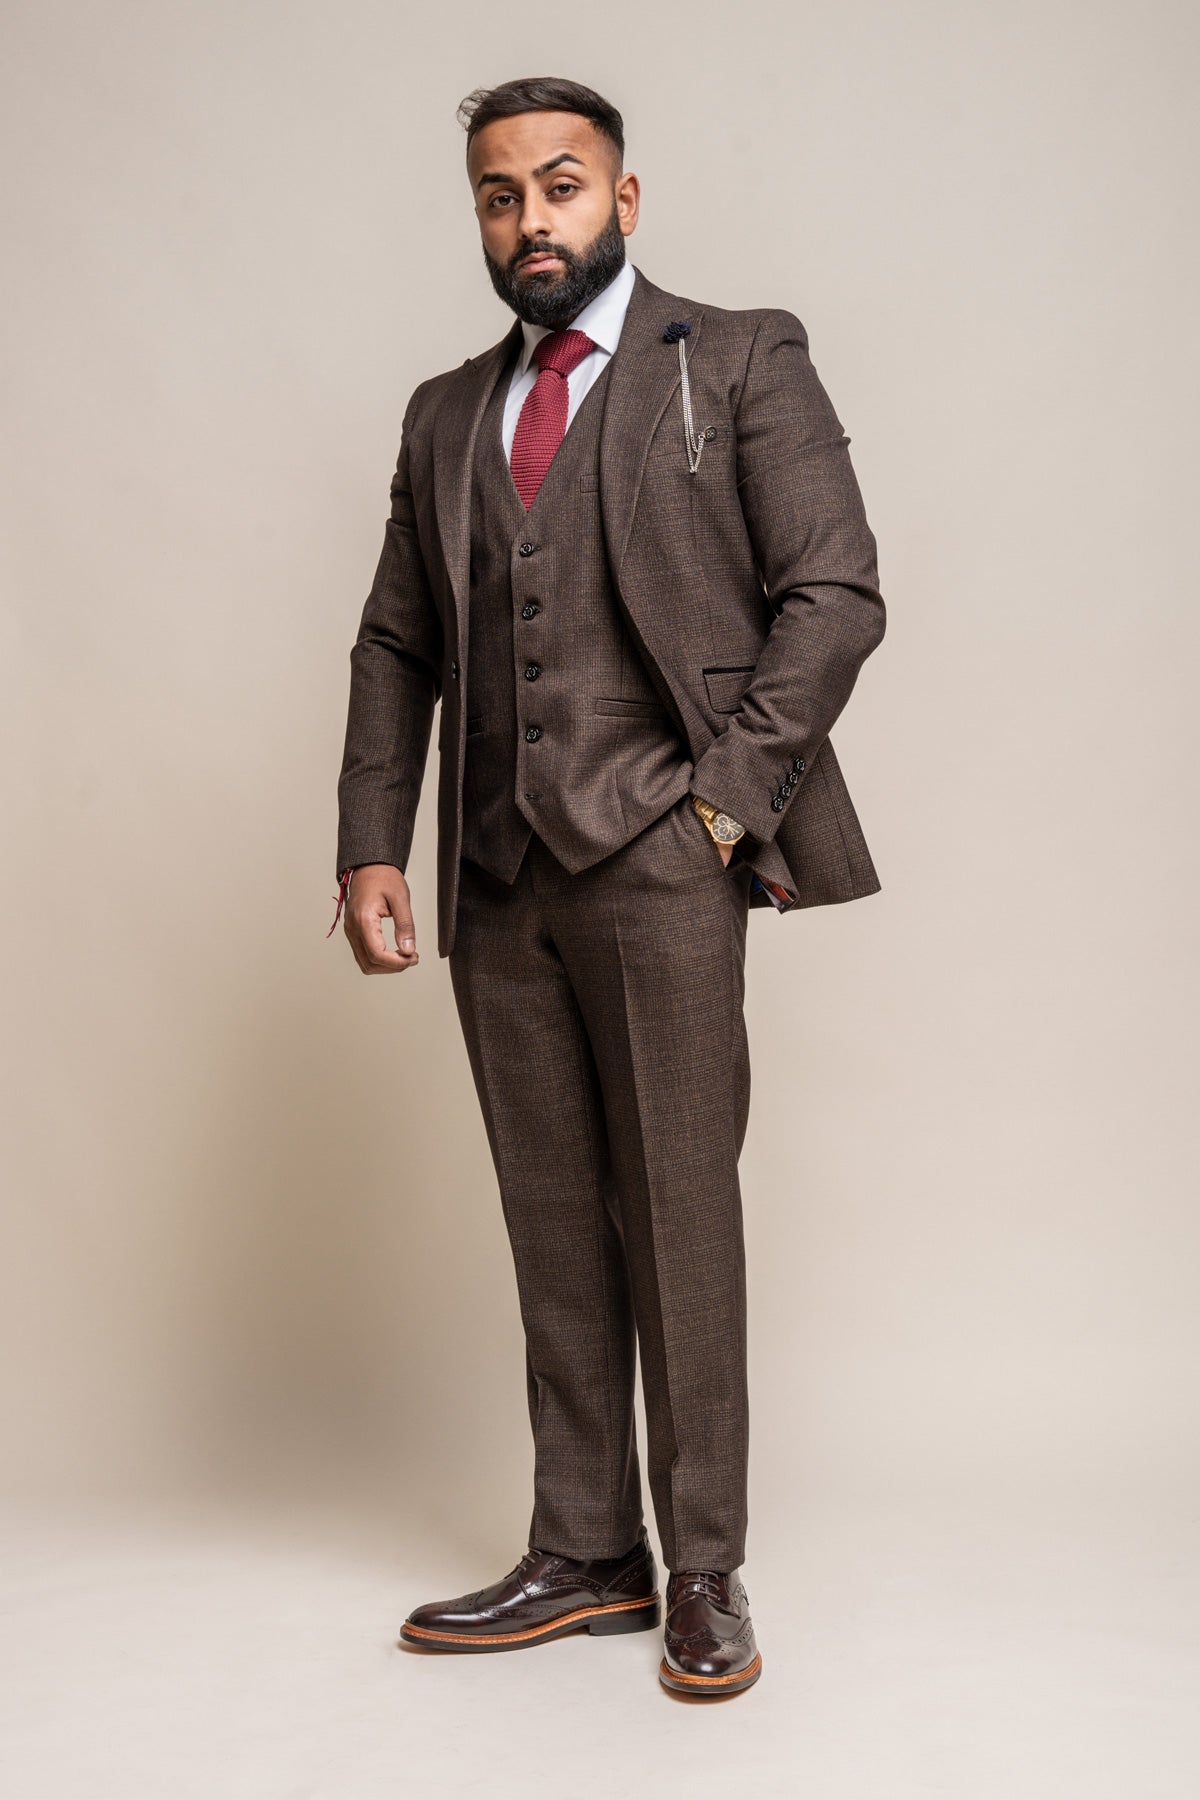 Caridi Brown Suit Swatch